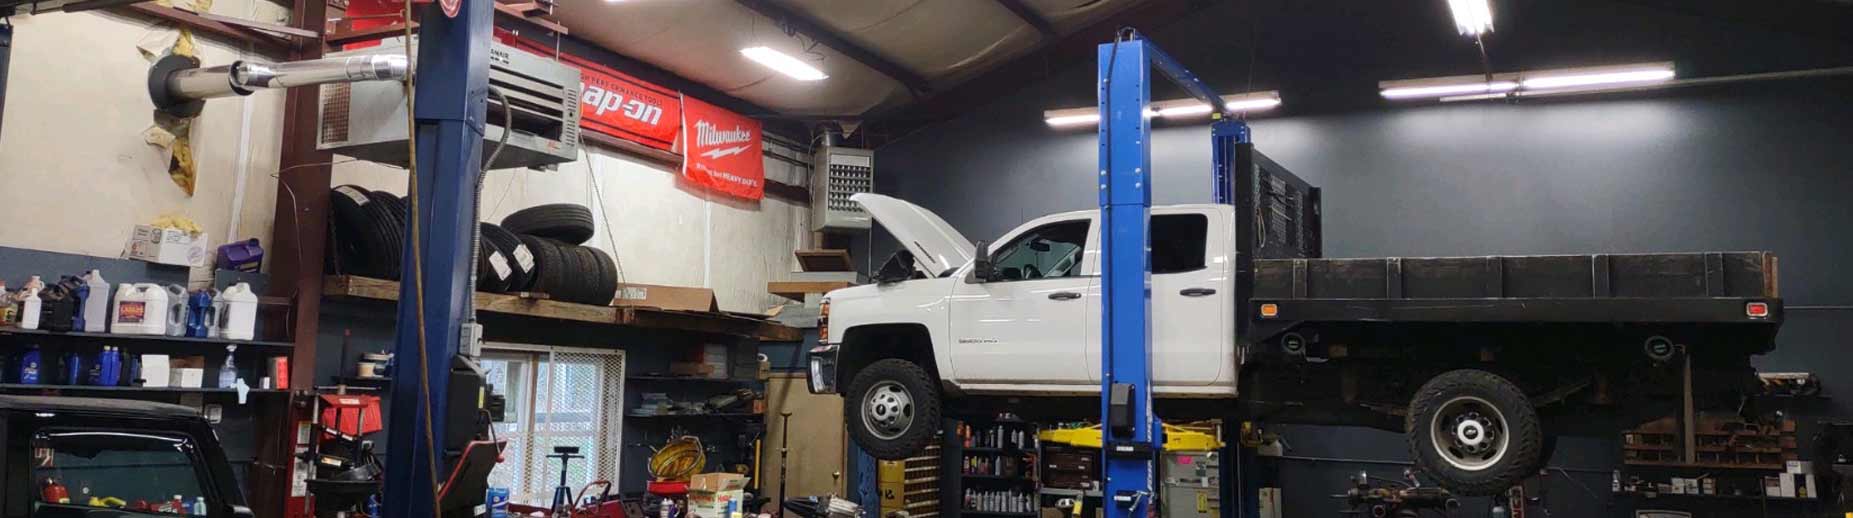 Collinsville Auto Repair, Auto Mechanic and Diesel Mechanic